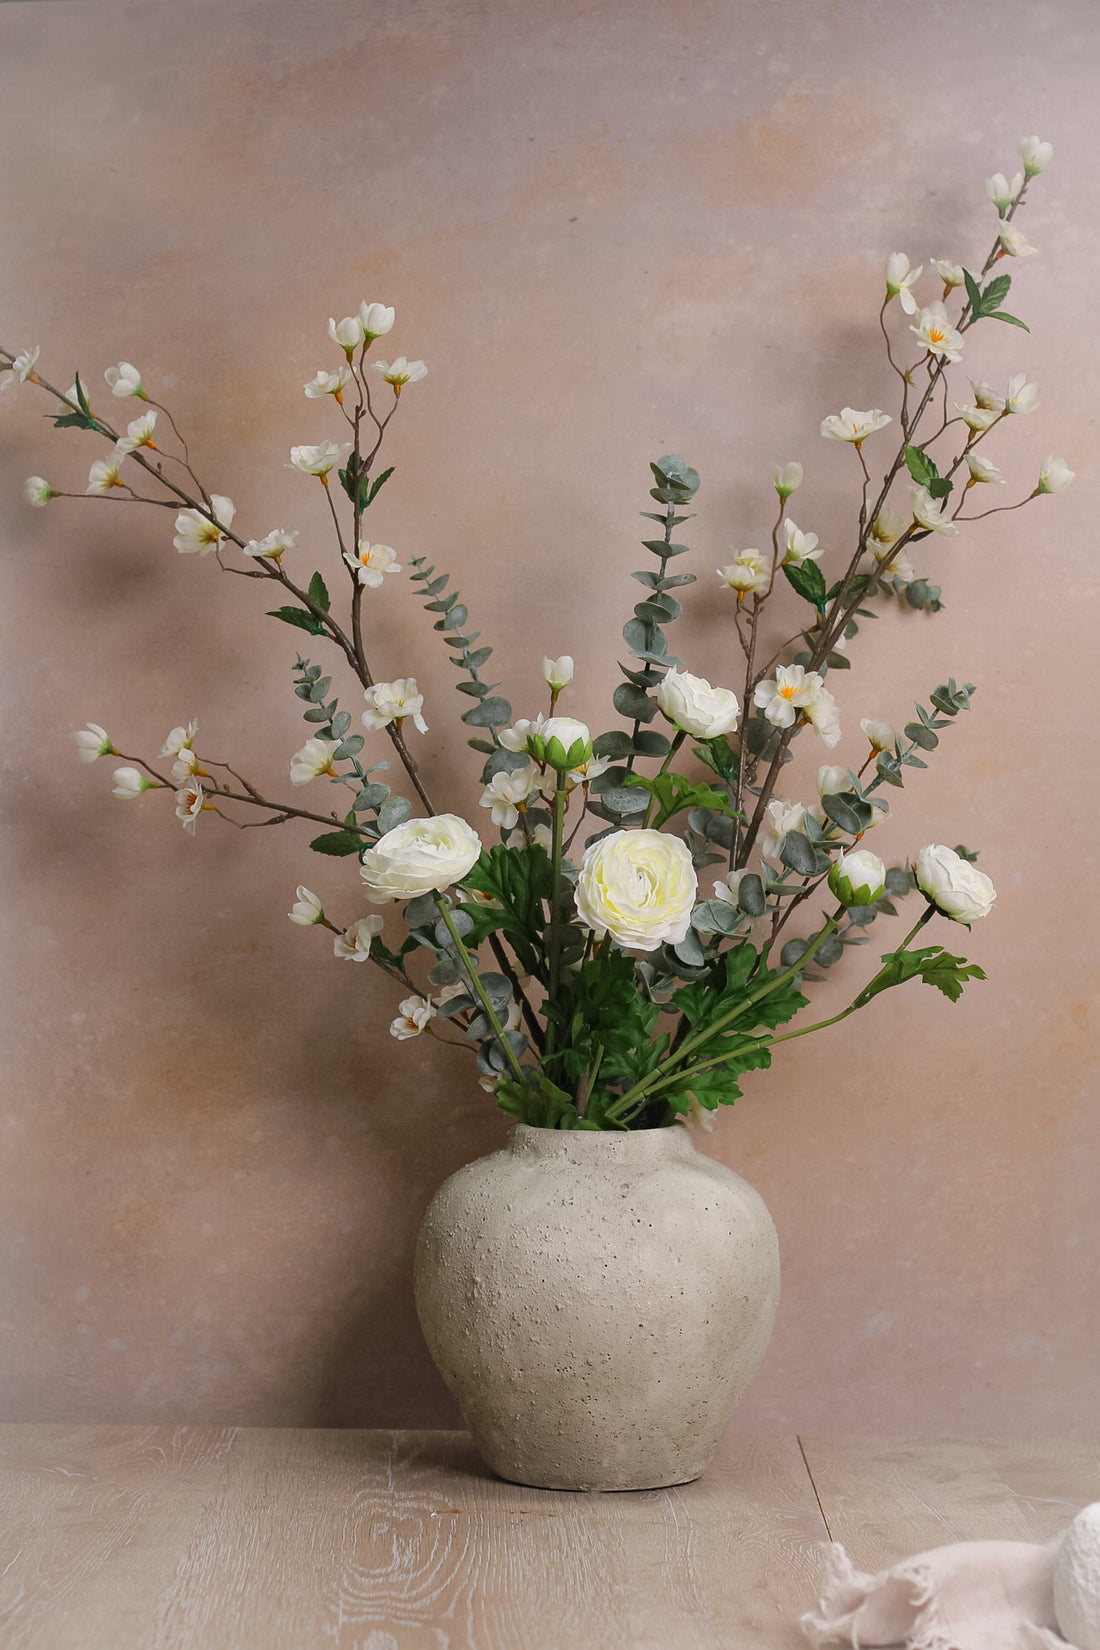 The White Spring Blossom Arrangement